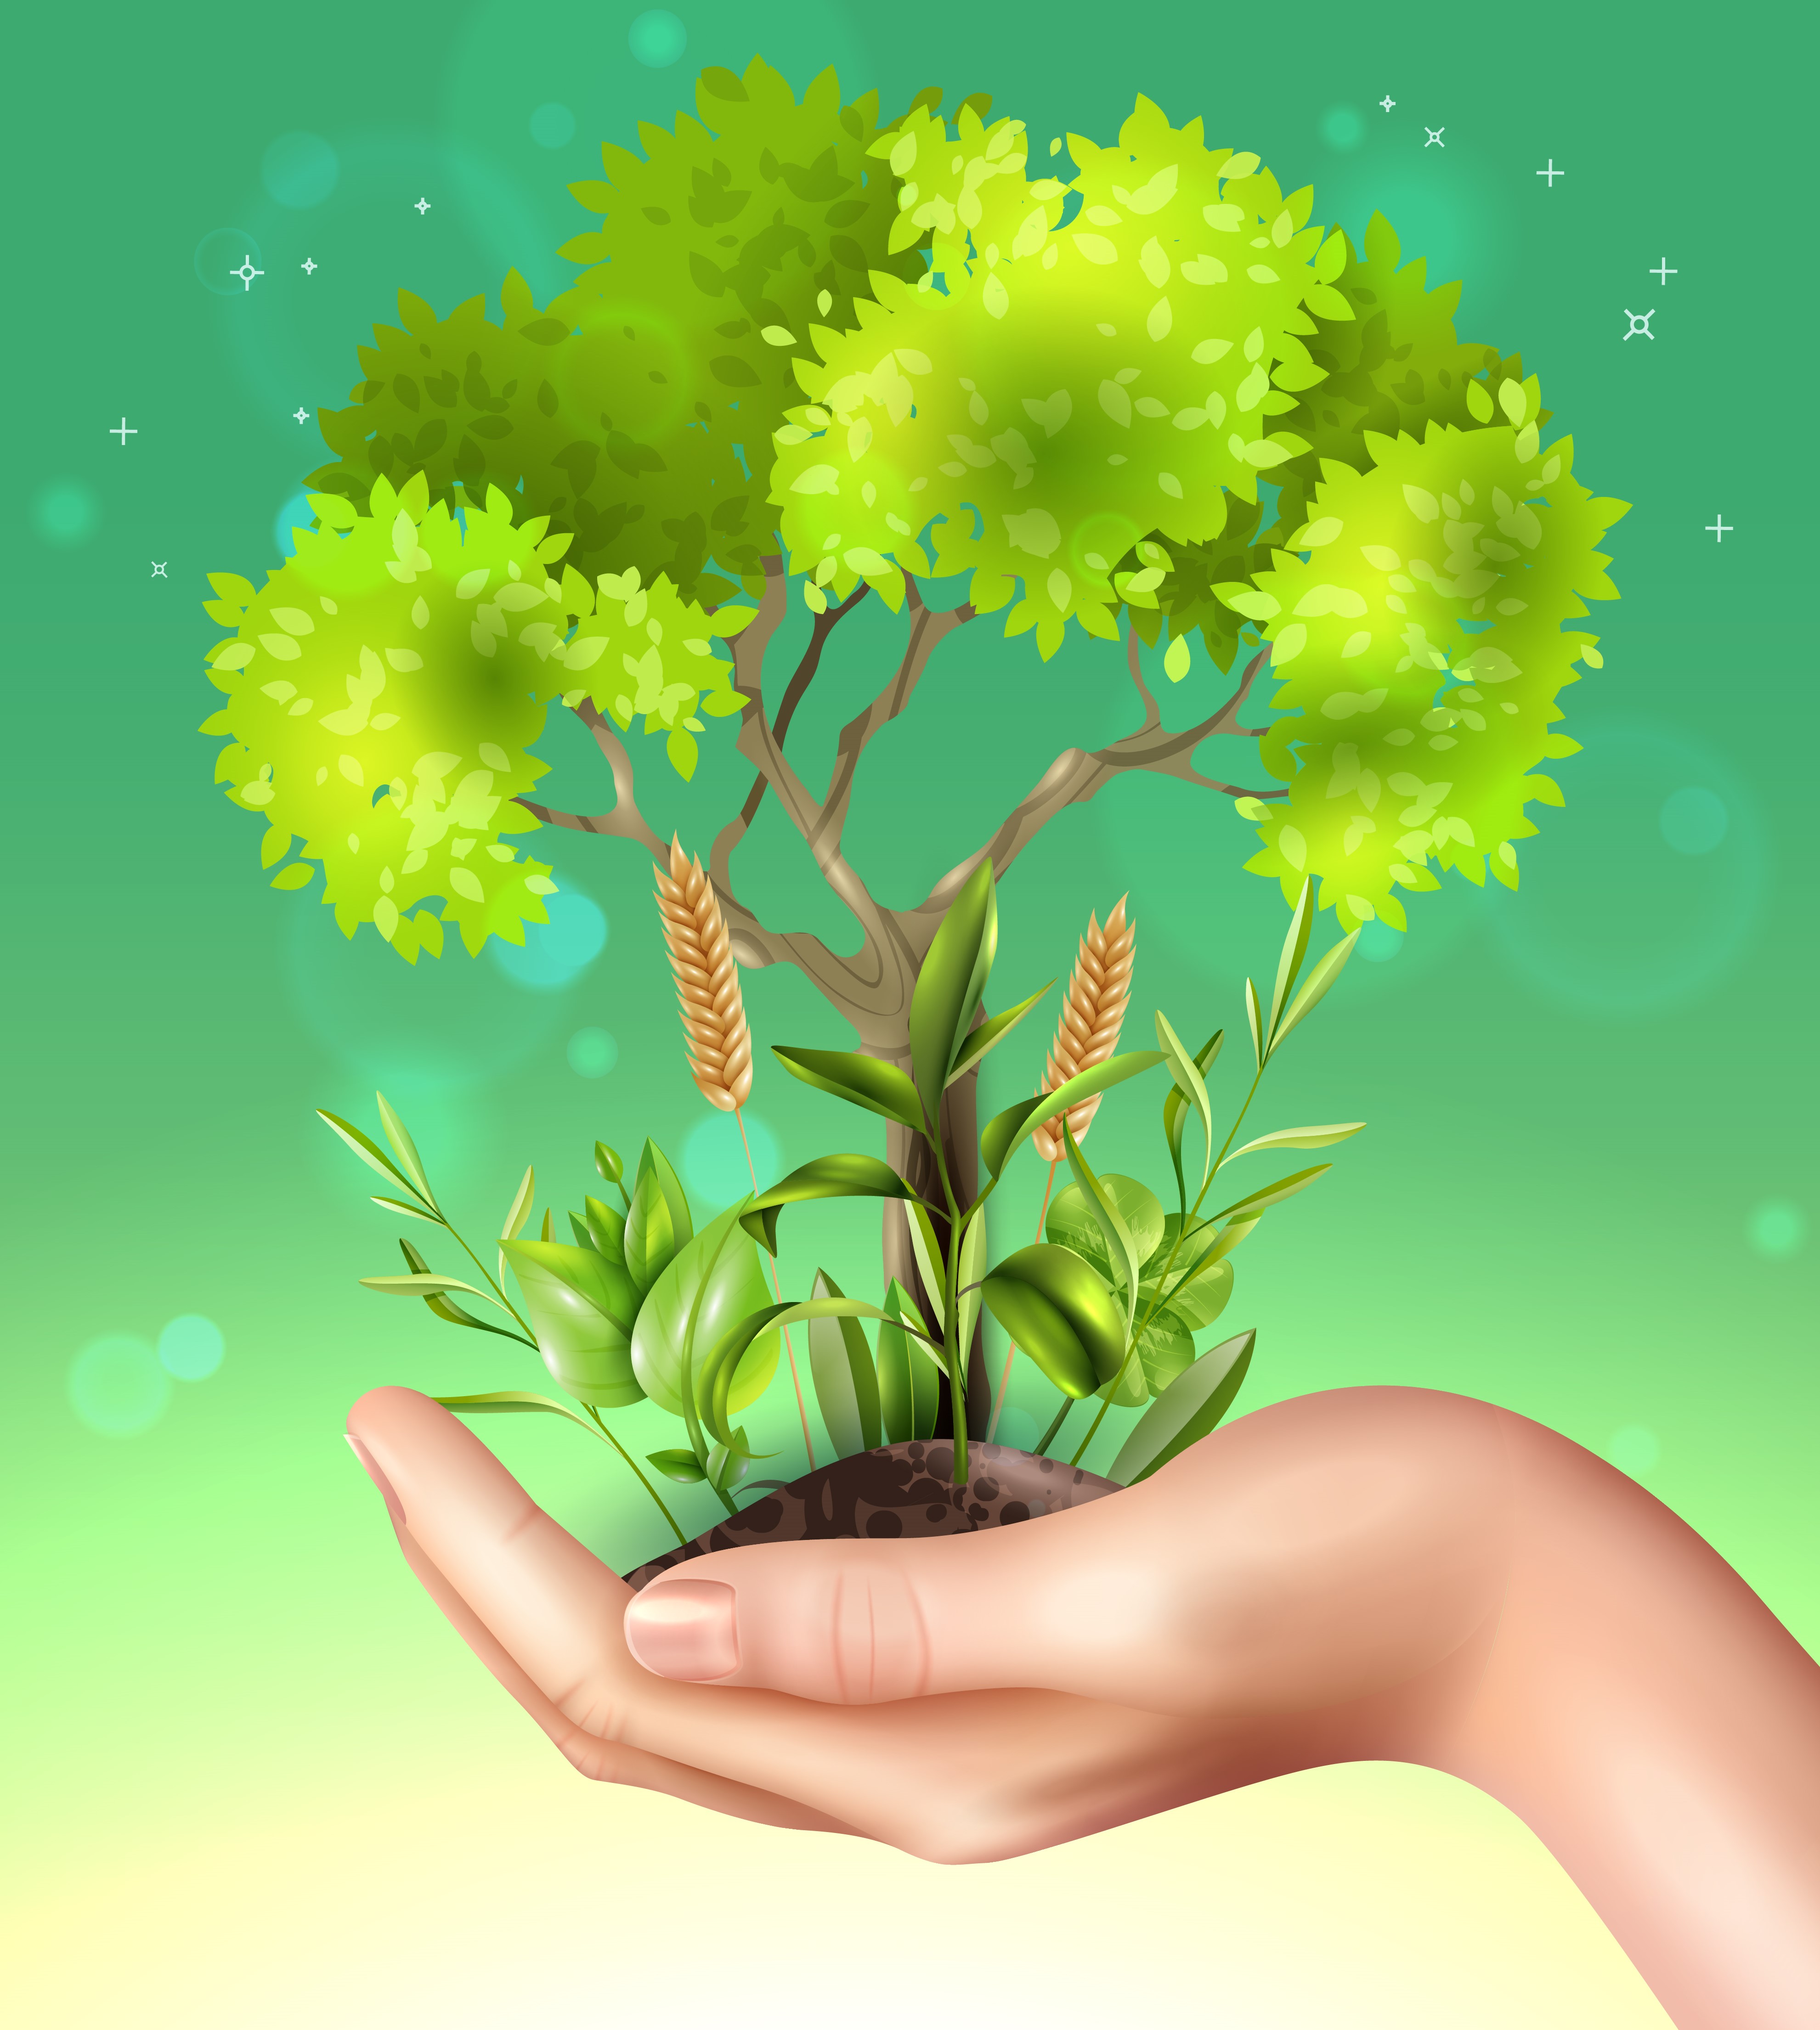 Realistic Hand Plants Ecology Illustration